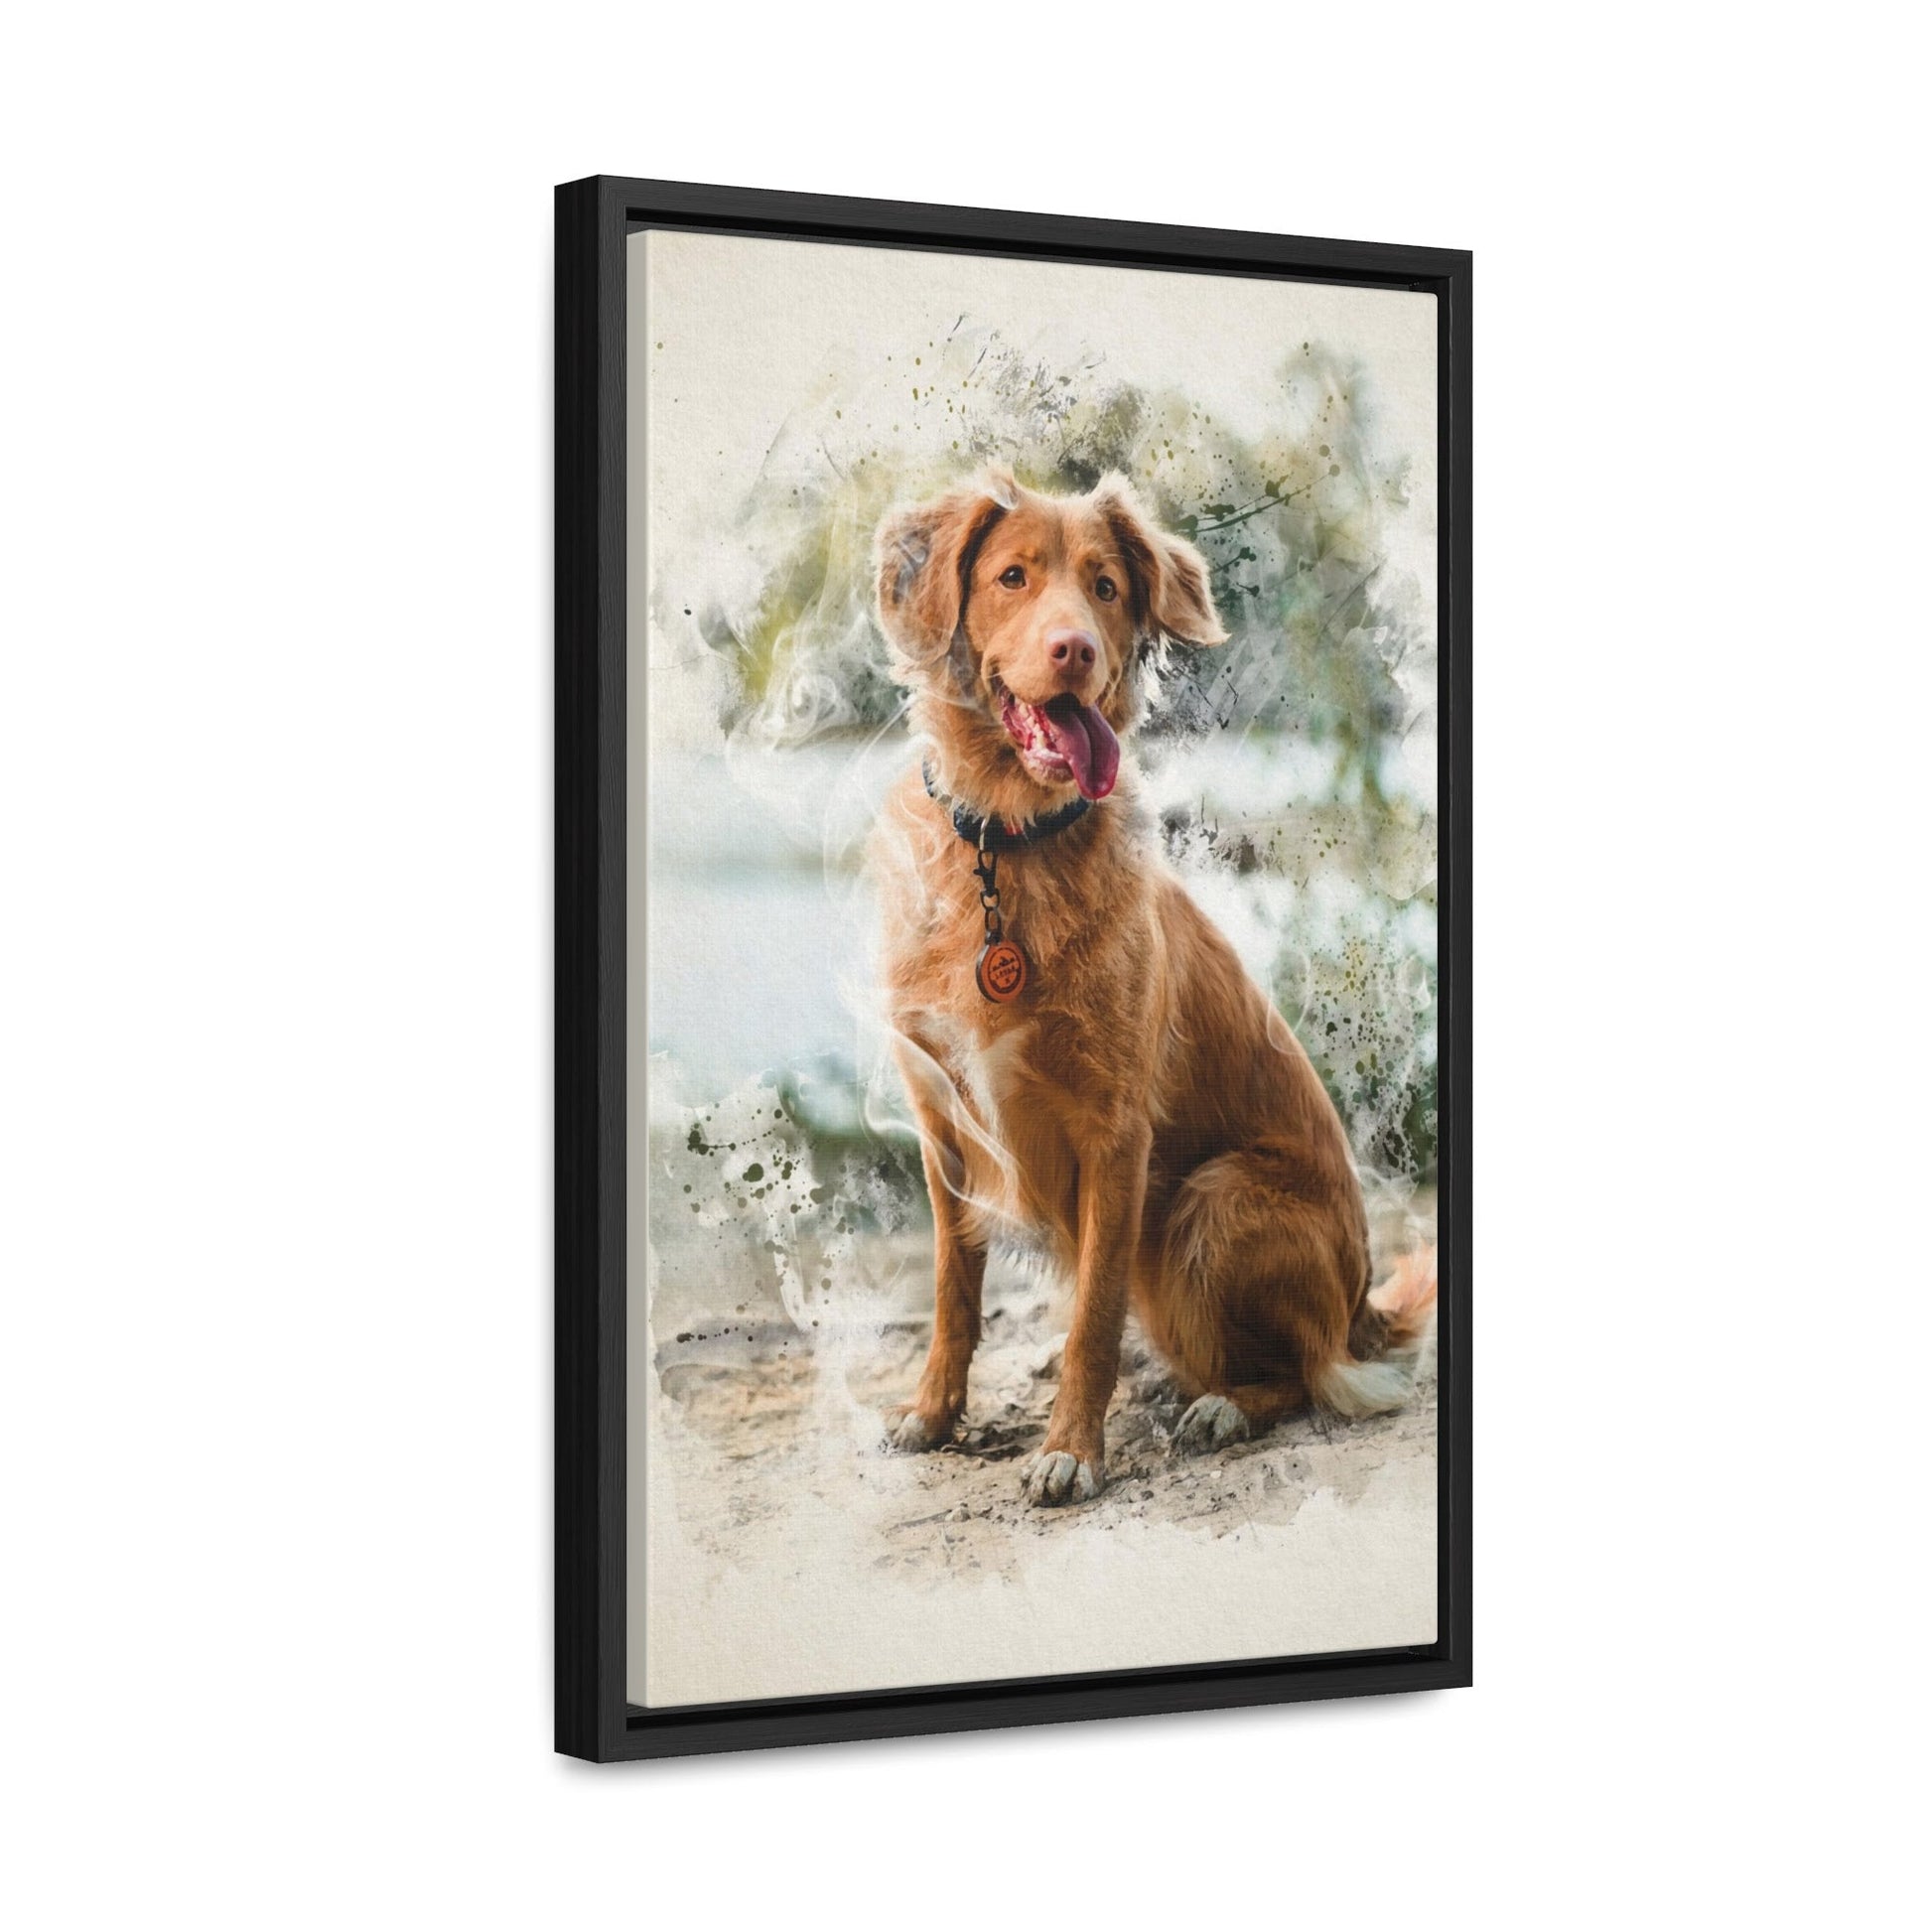 Vivid custom pet portrait on stretched canvas, a timeless keepsake- dog portrait